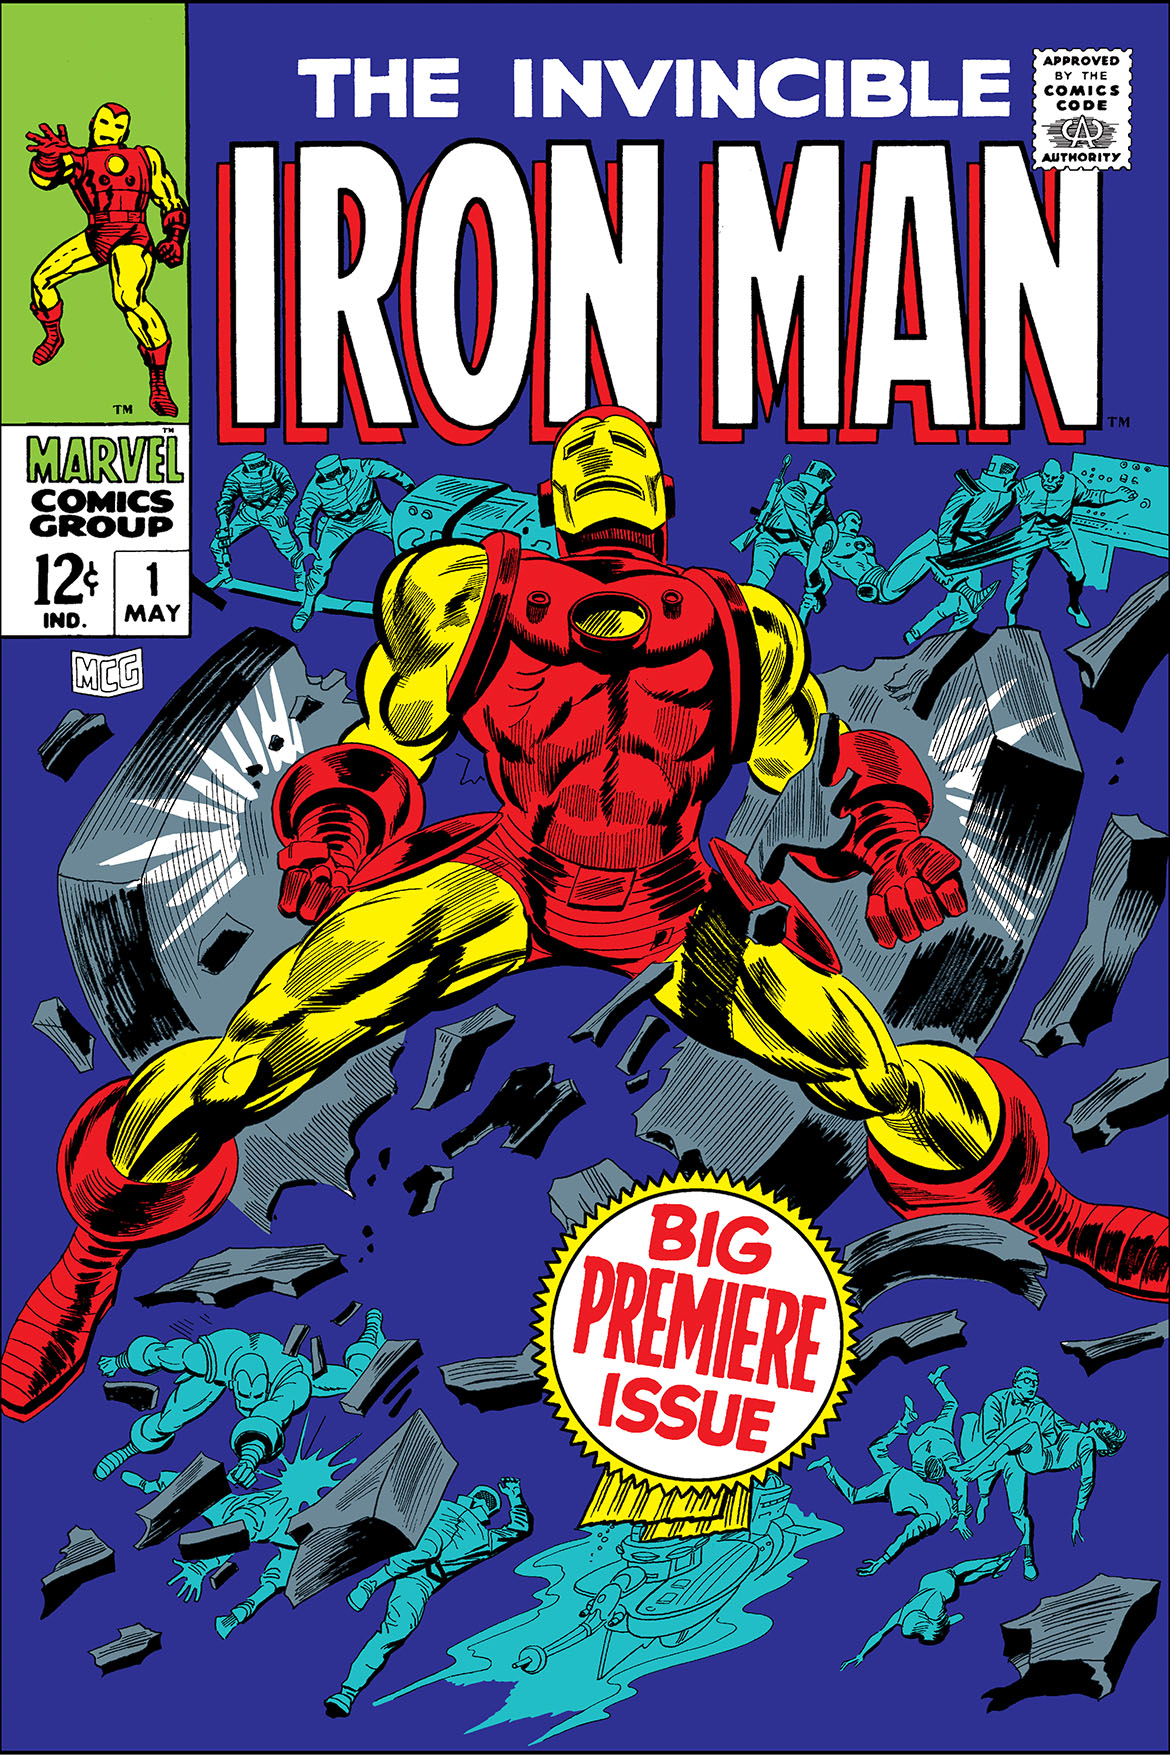 I Am Iron Man: The Marvel Cinematic Universe Takes Flight - Qagoma Blog